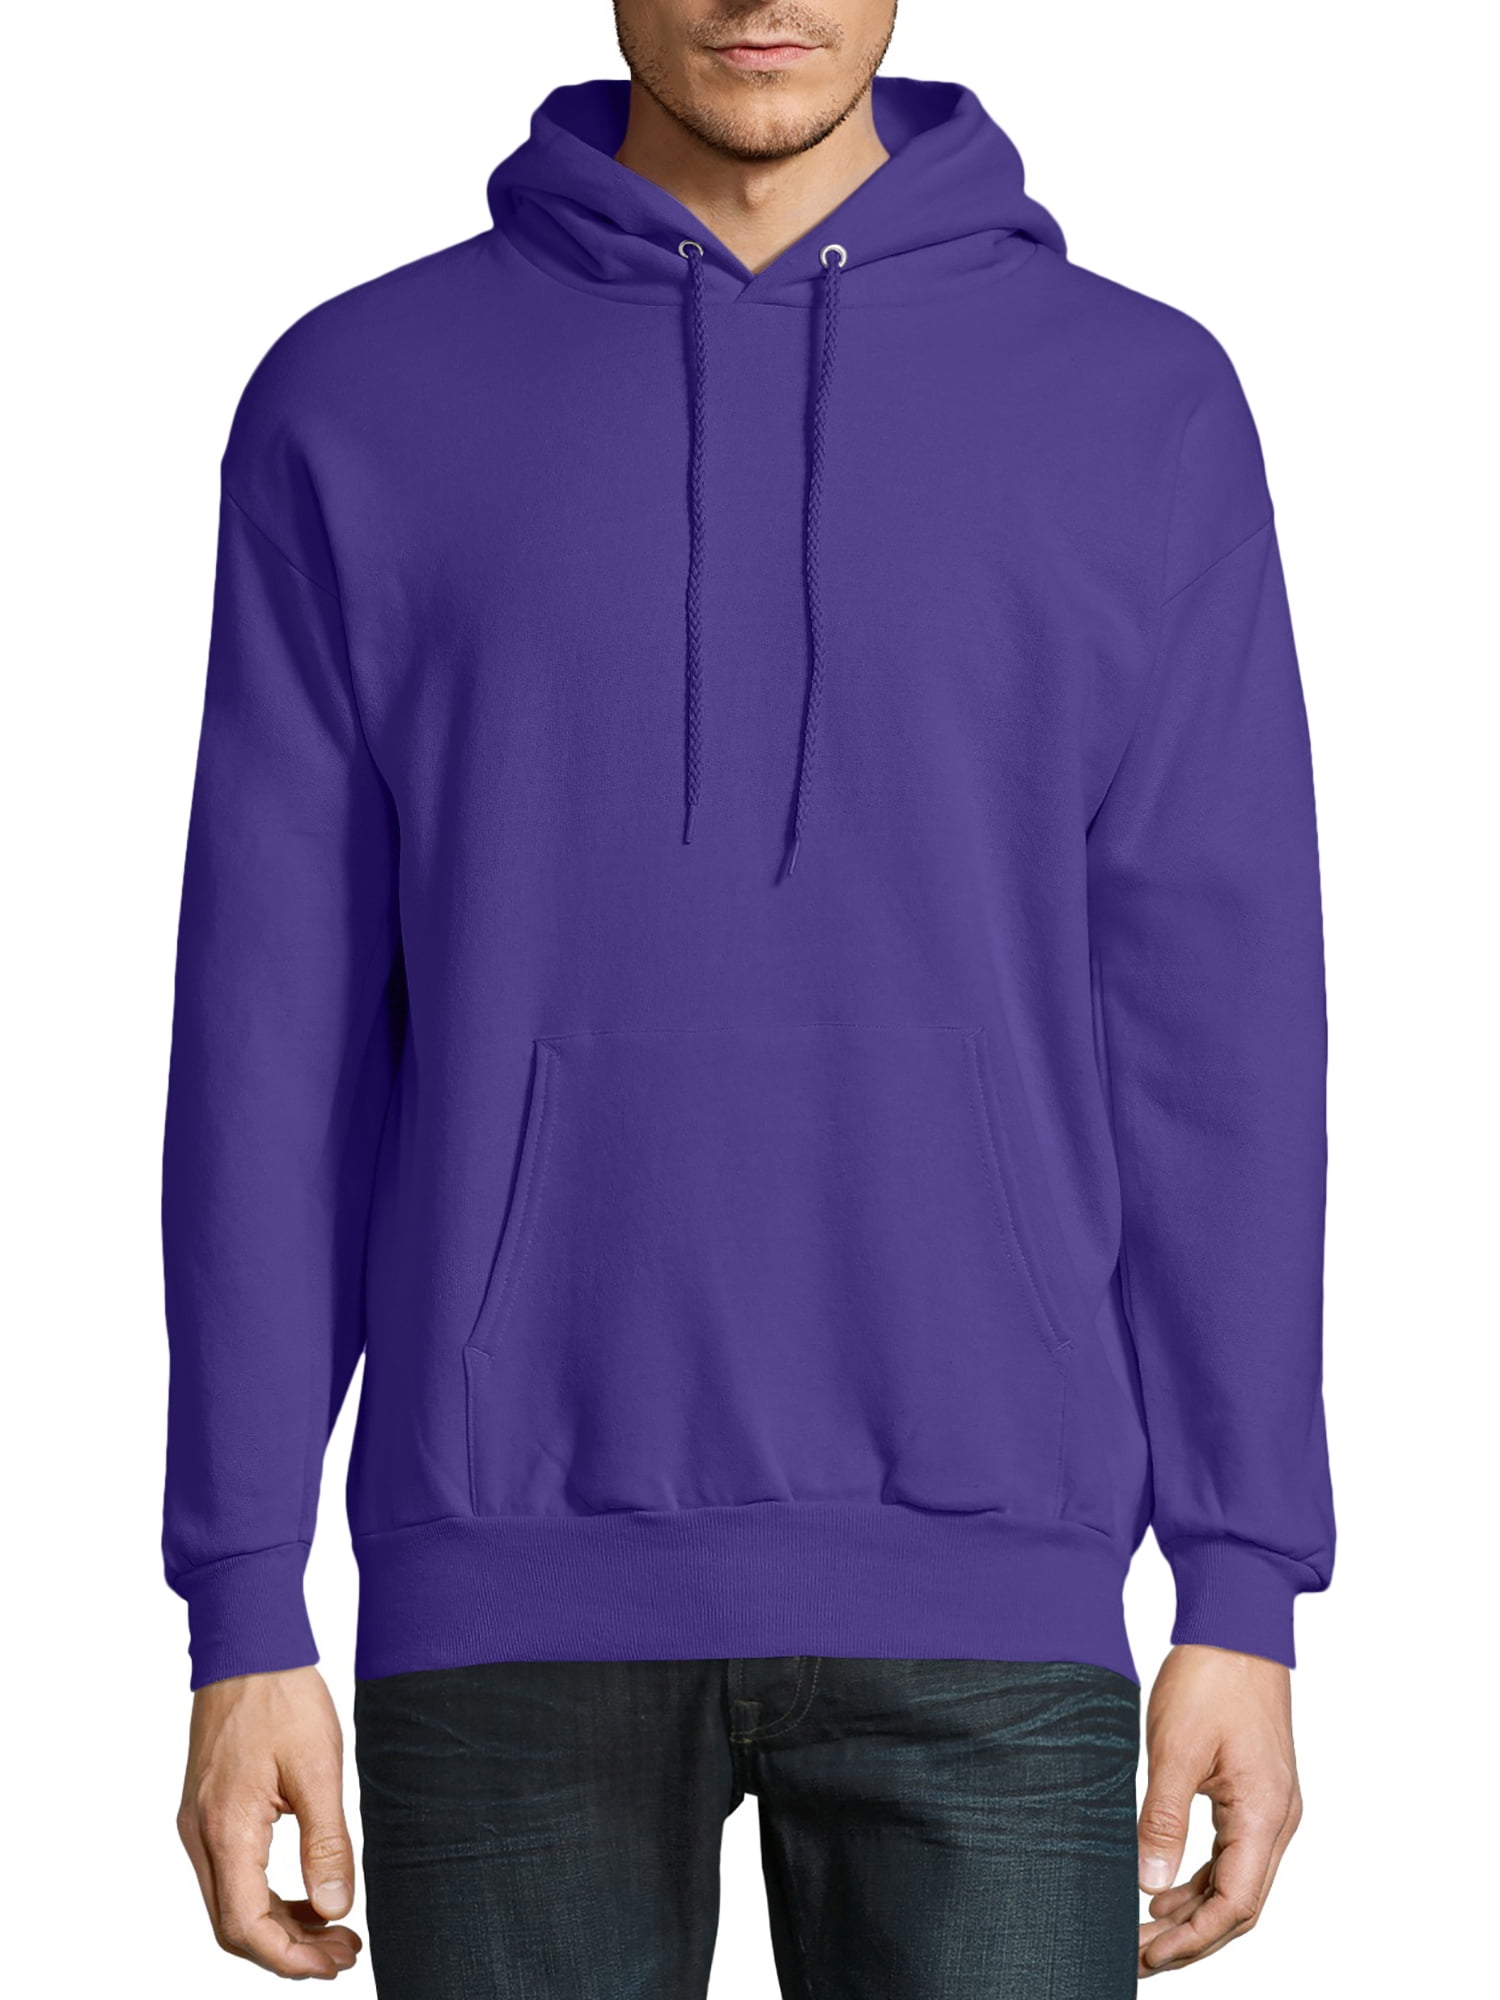 Hanes P170 Mens EcoSmart Hooded Sweatshirt 3XL 1 Cardinal 1 Purple